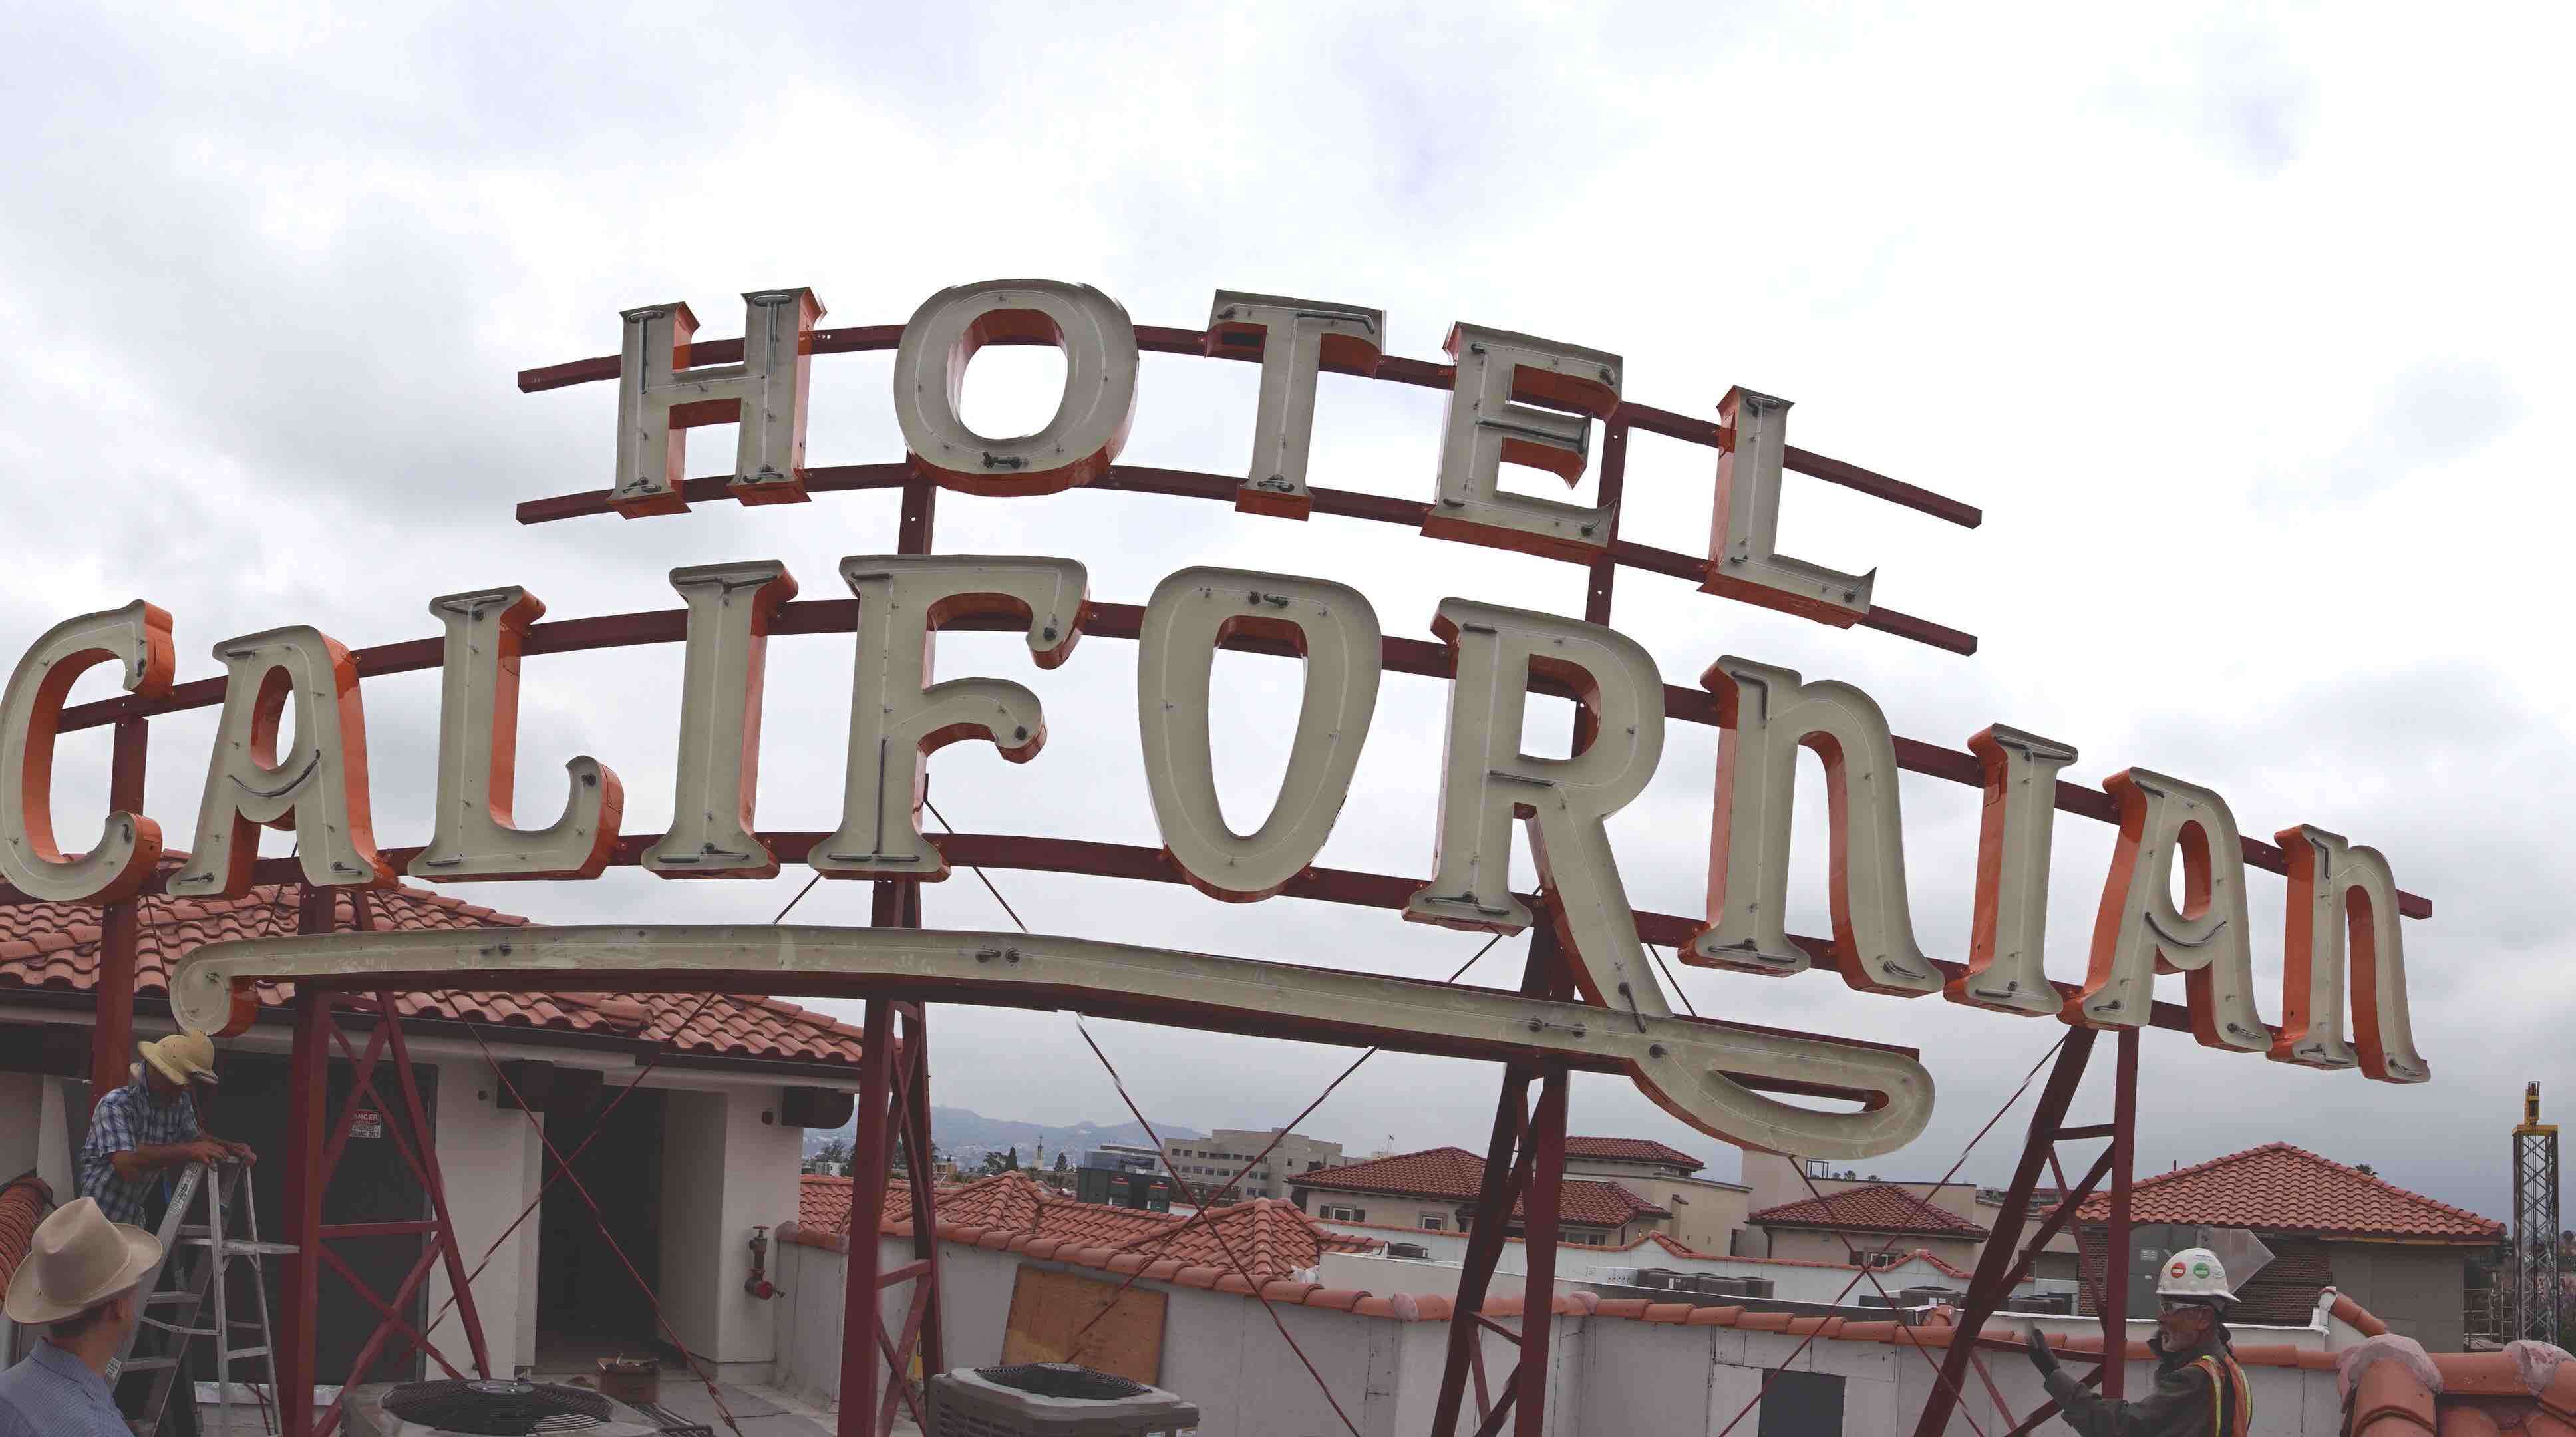 Historic Hotel Californian neon sign rededication